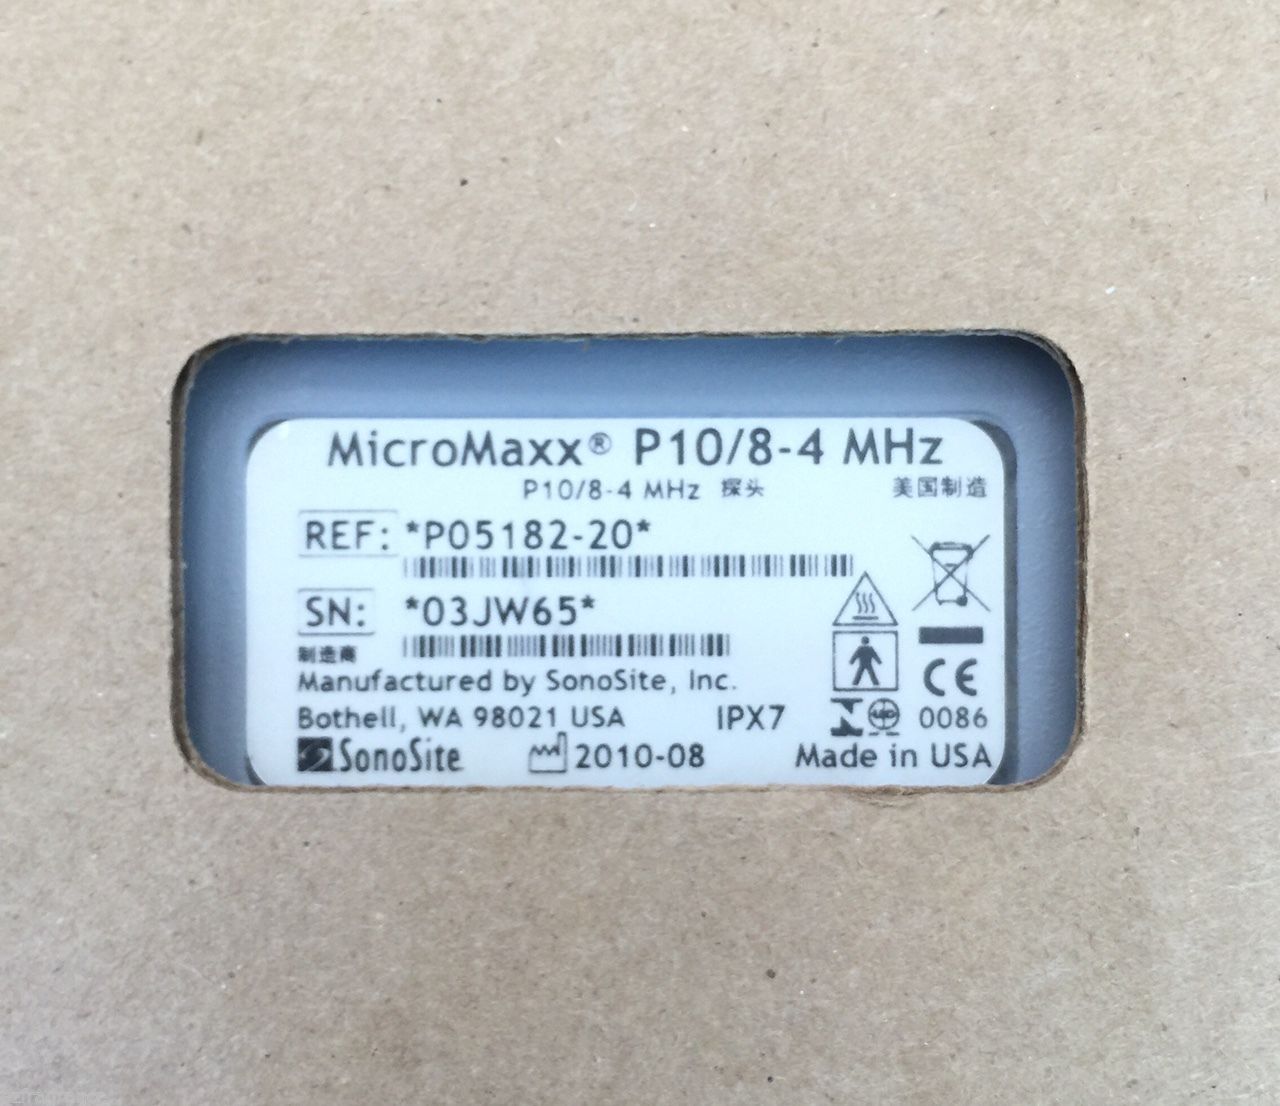 Sonosite Micromaxx P10 / 8-4 MHz ULTRASOUND PROBE TRANSDUCER REF # P05182-20 DIAGNOSTIC ULTRASOUND MACHINES FOR SALE